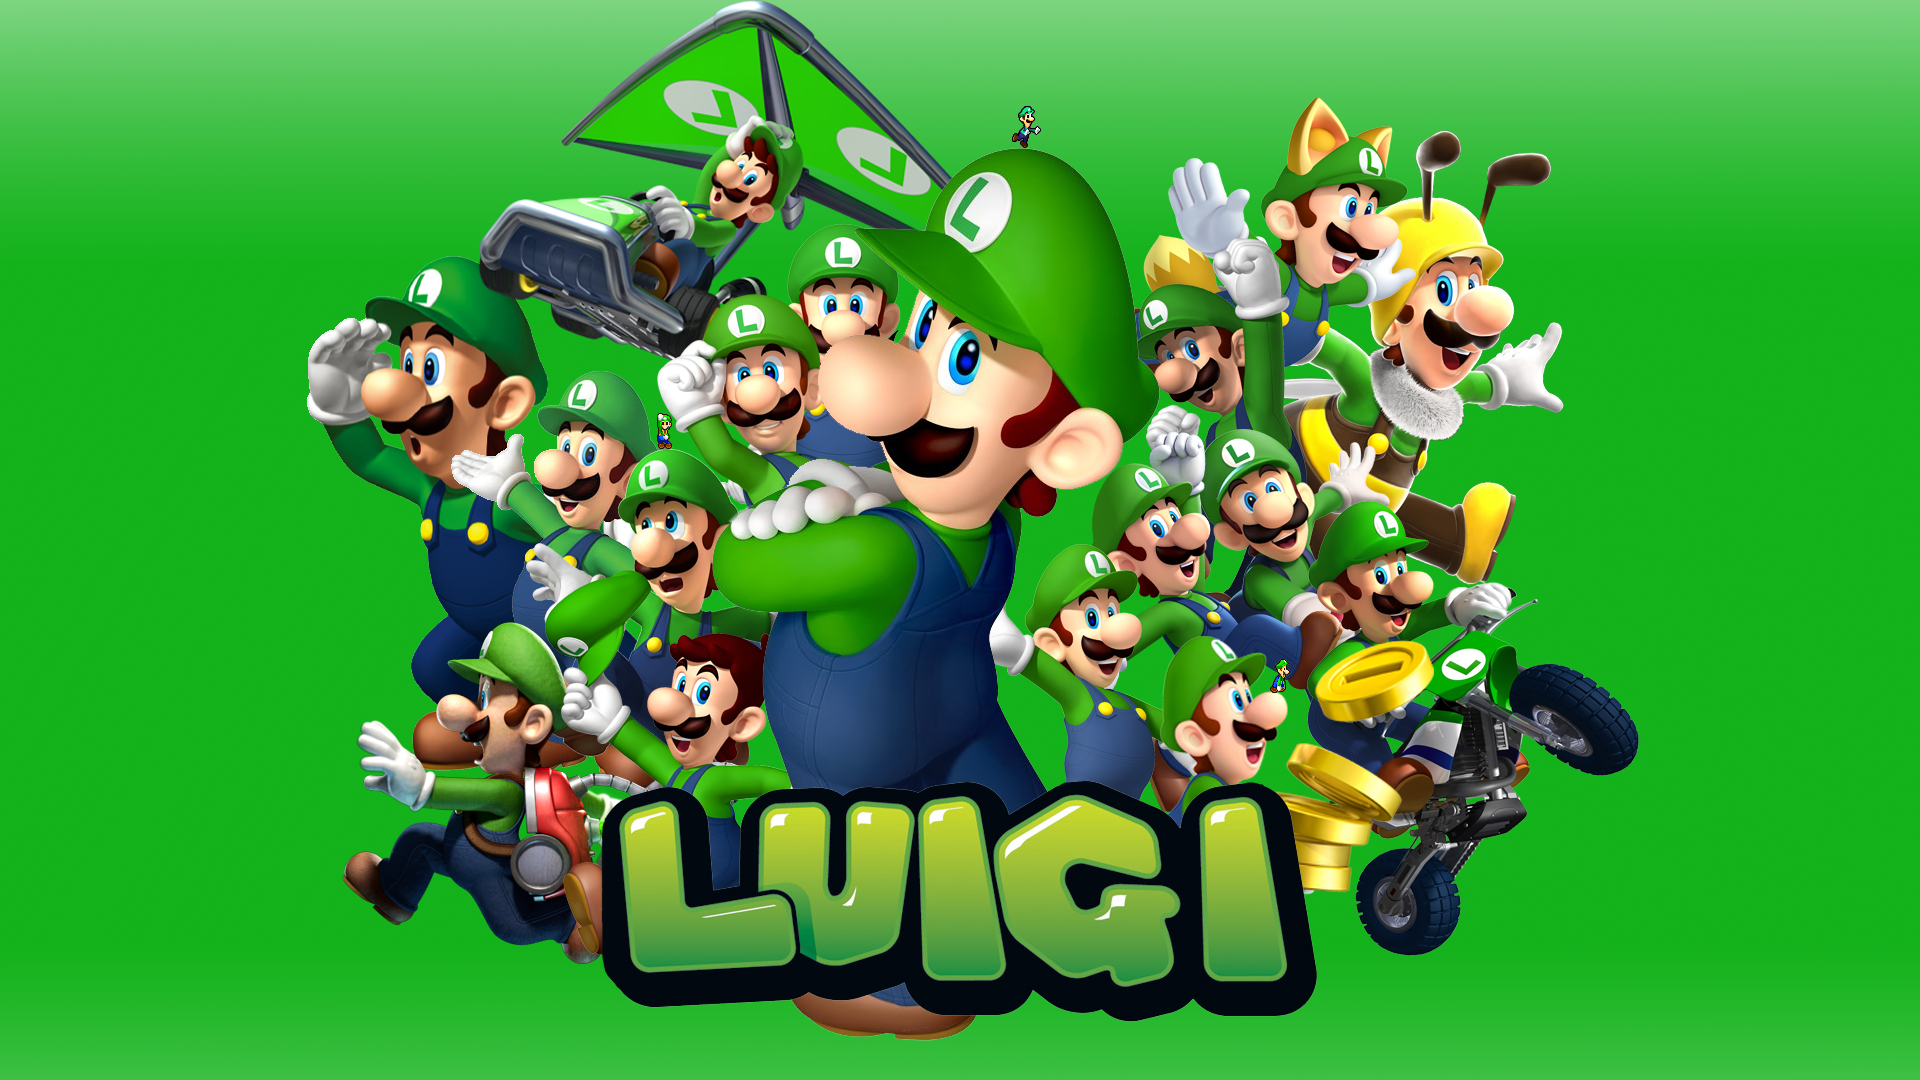 Luigi Wallpaper By Zupertompa